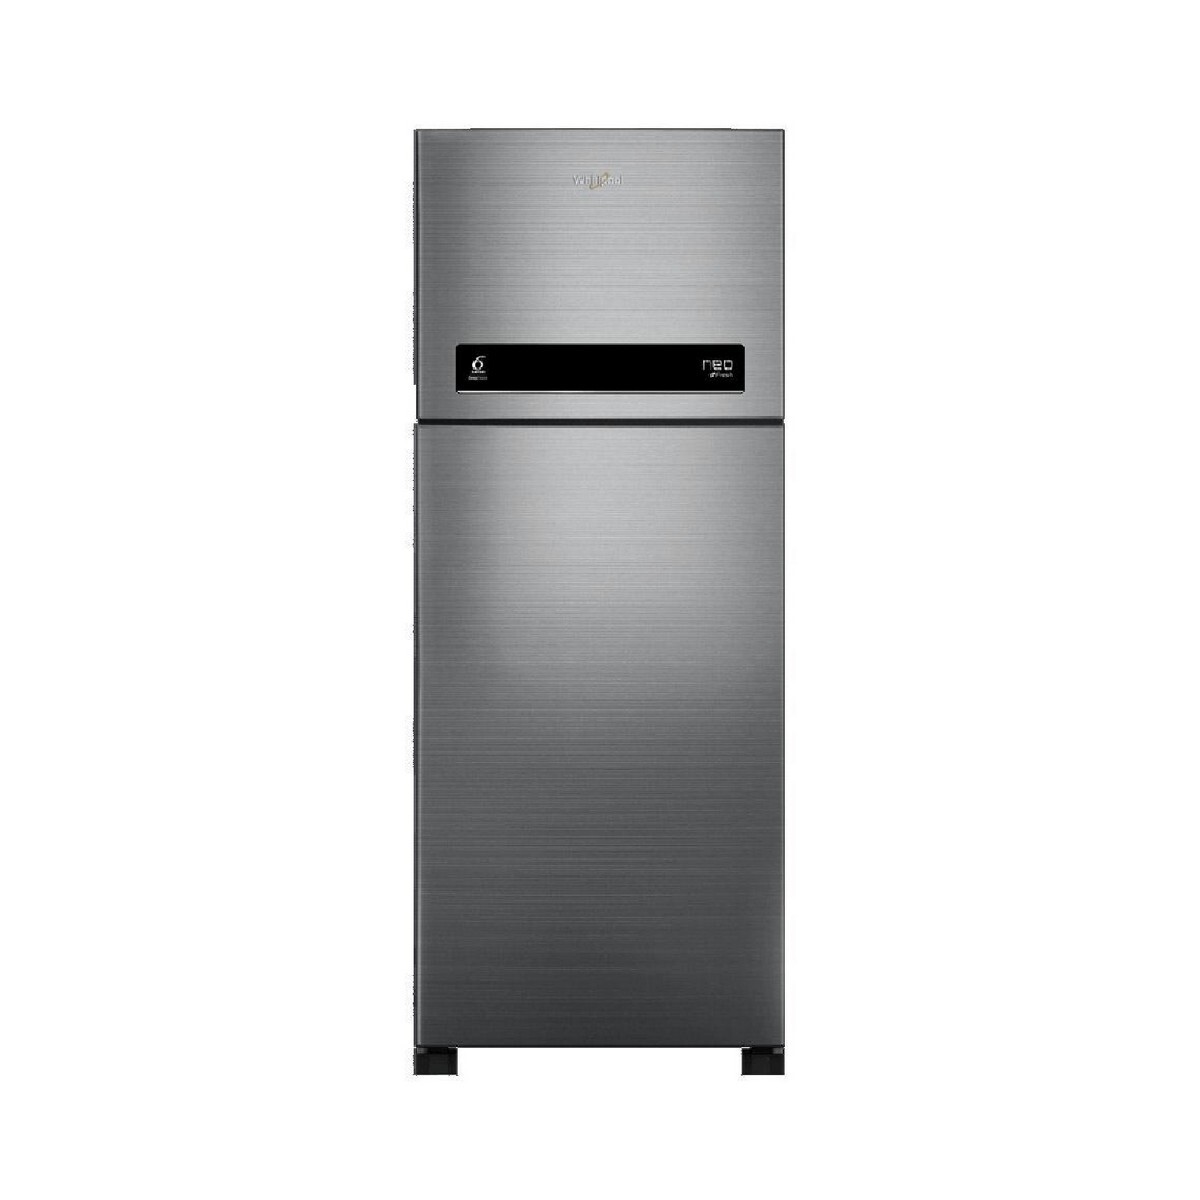 Whirlpool 265 L 2 Star Frost Free Double Door Refrigerator  Grey